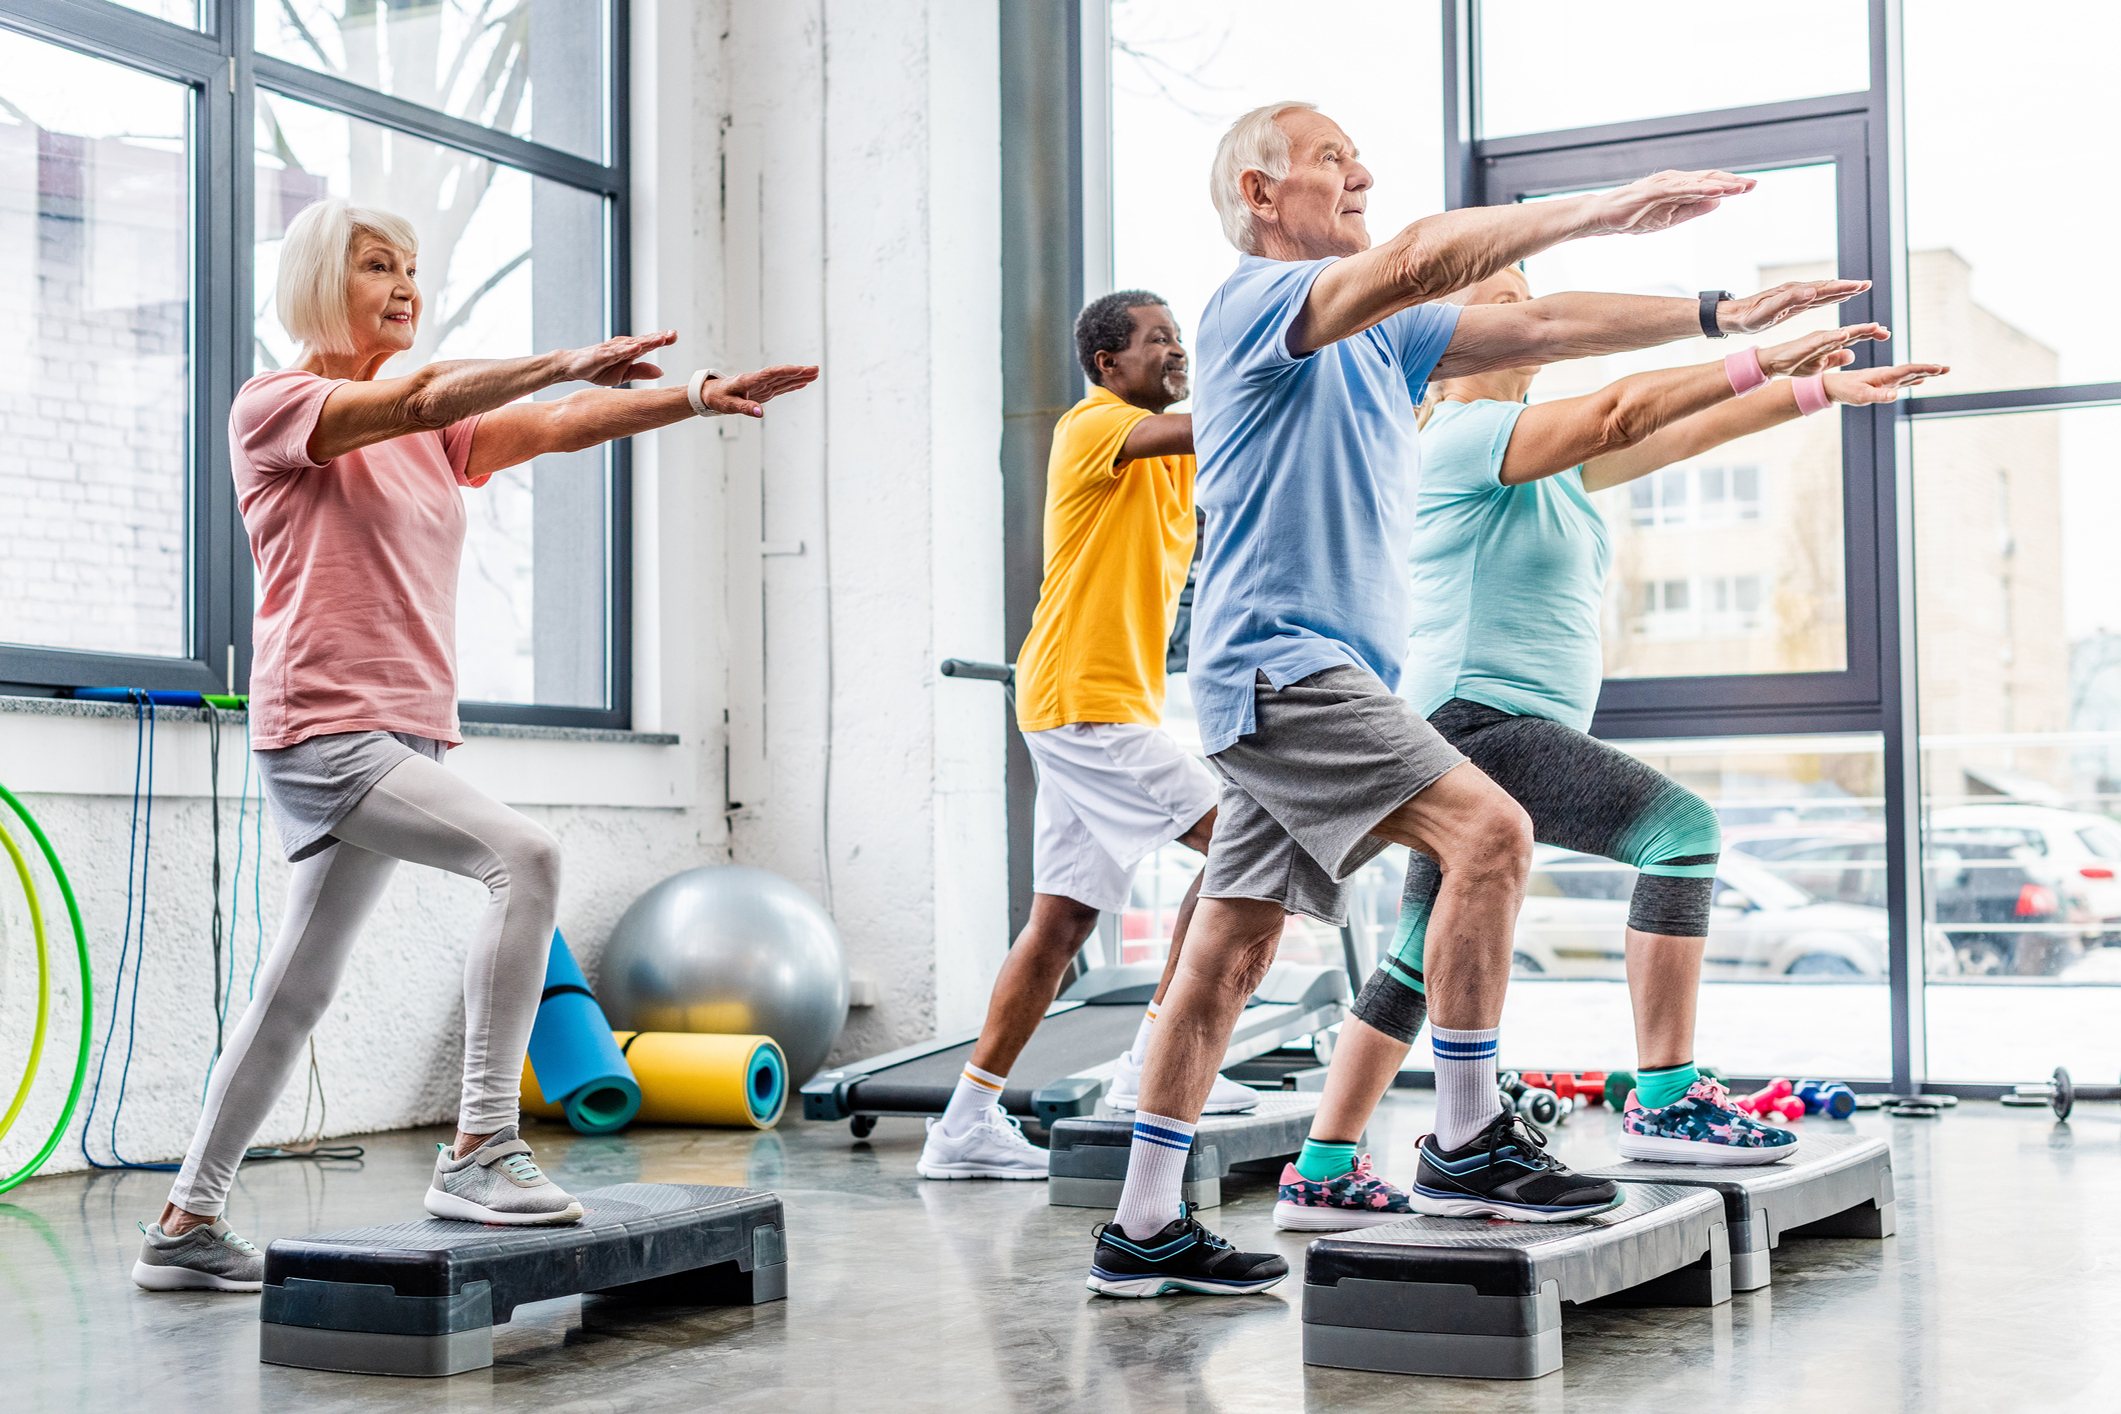 Senior Fitness: Four Key Components to Examine